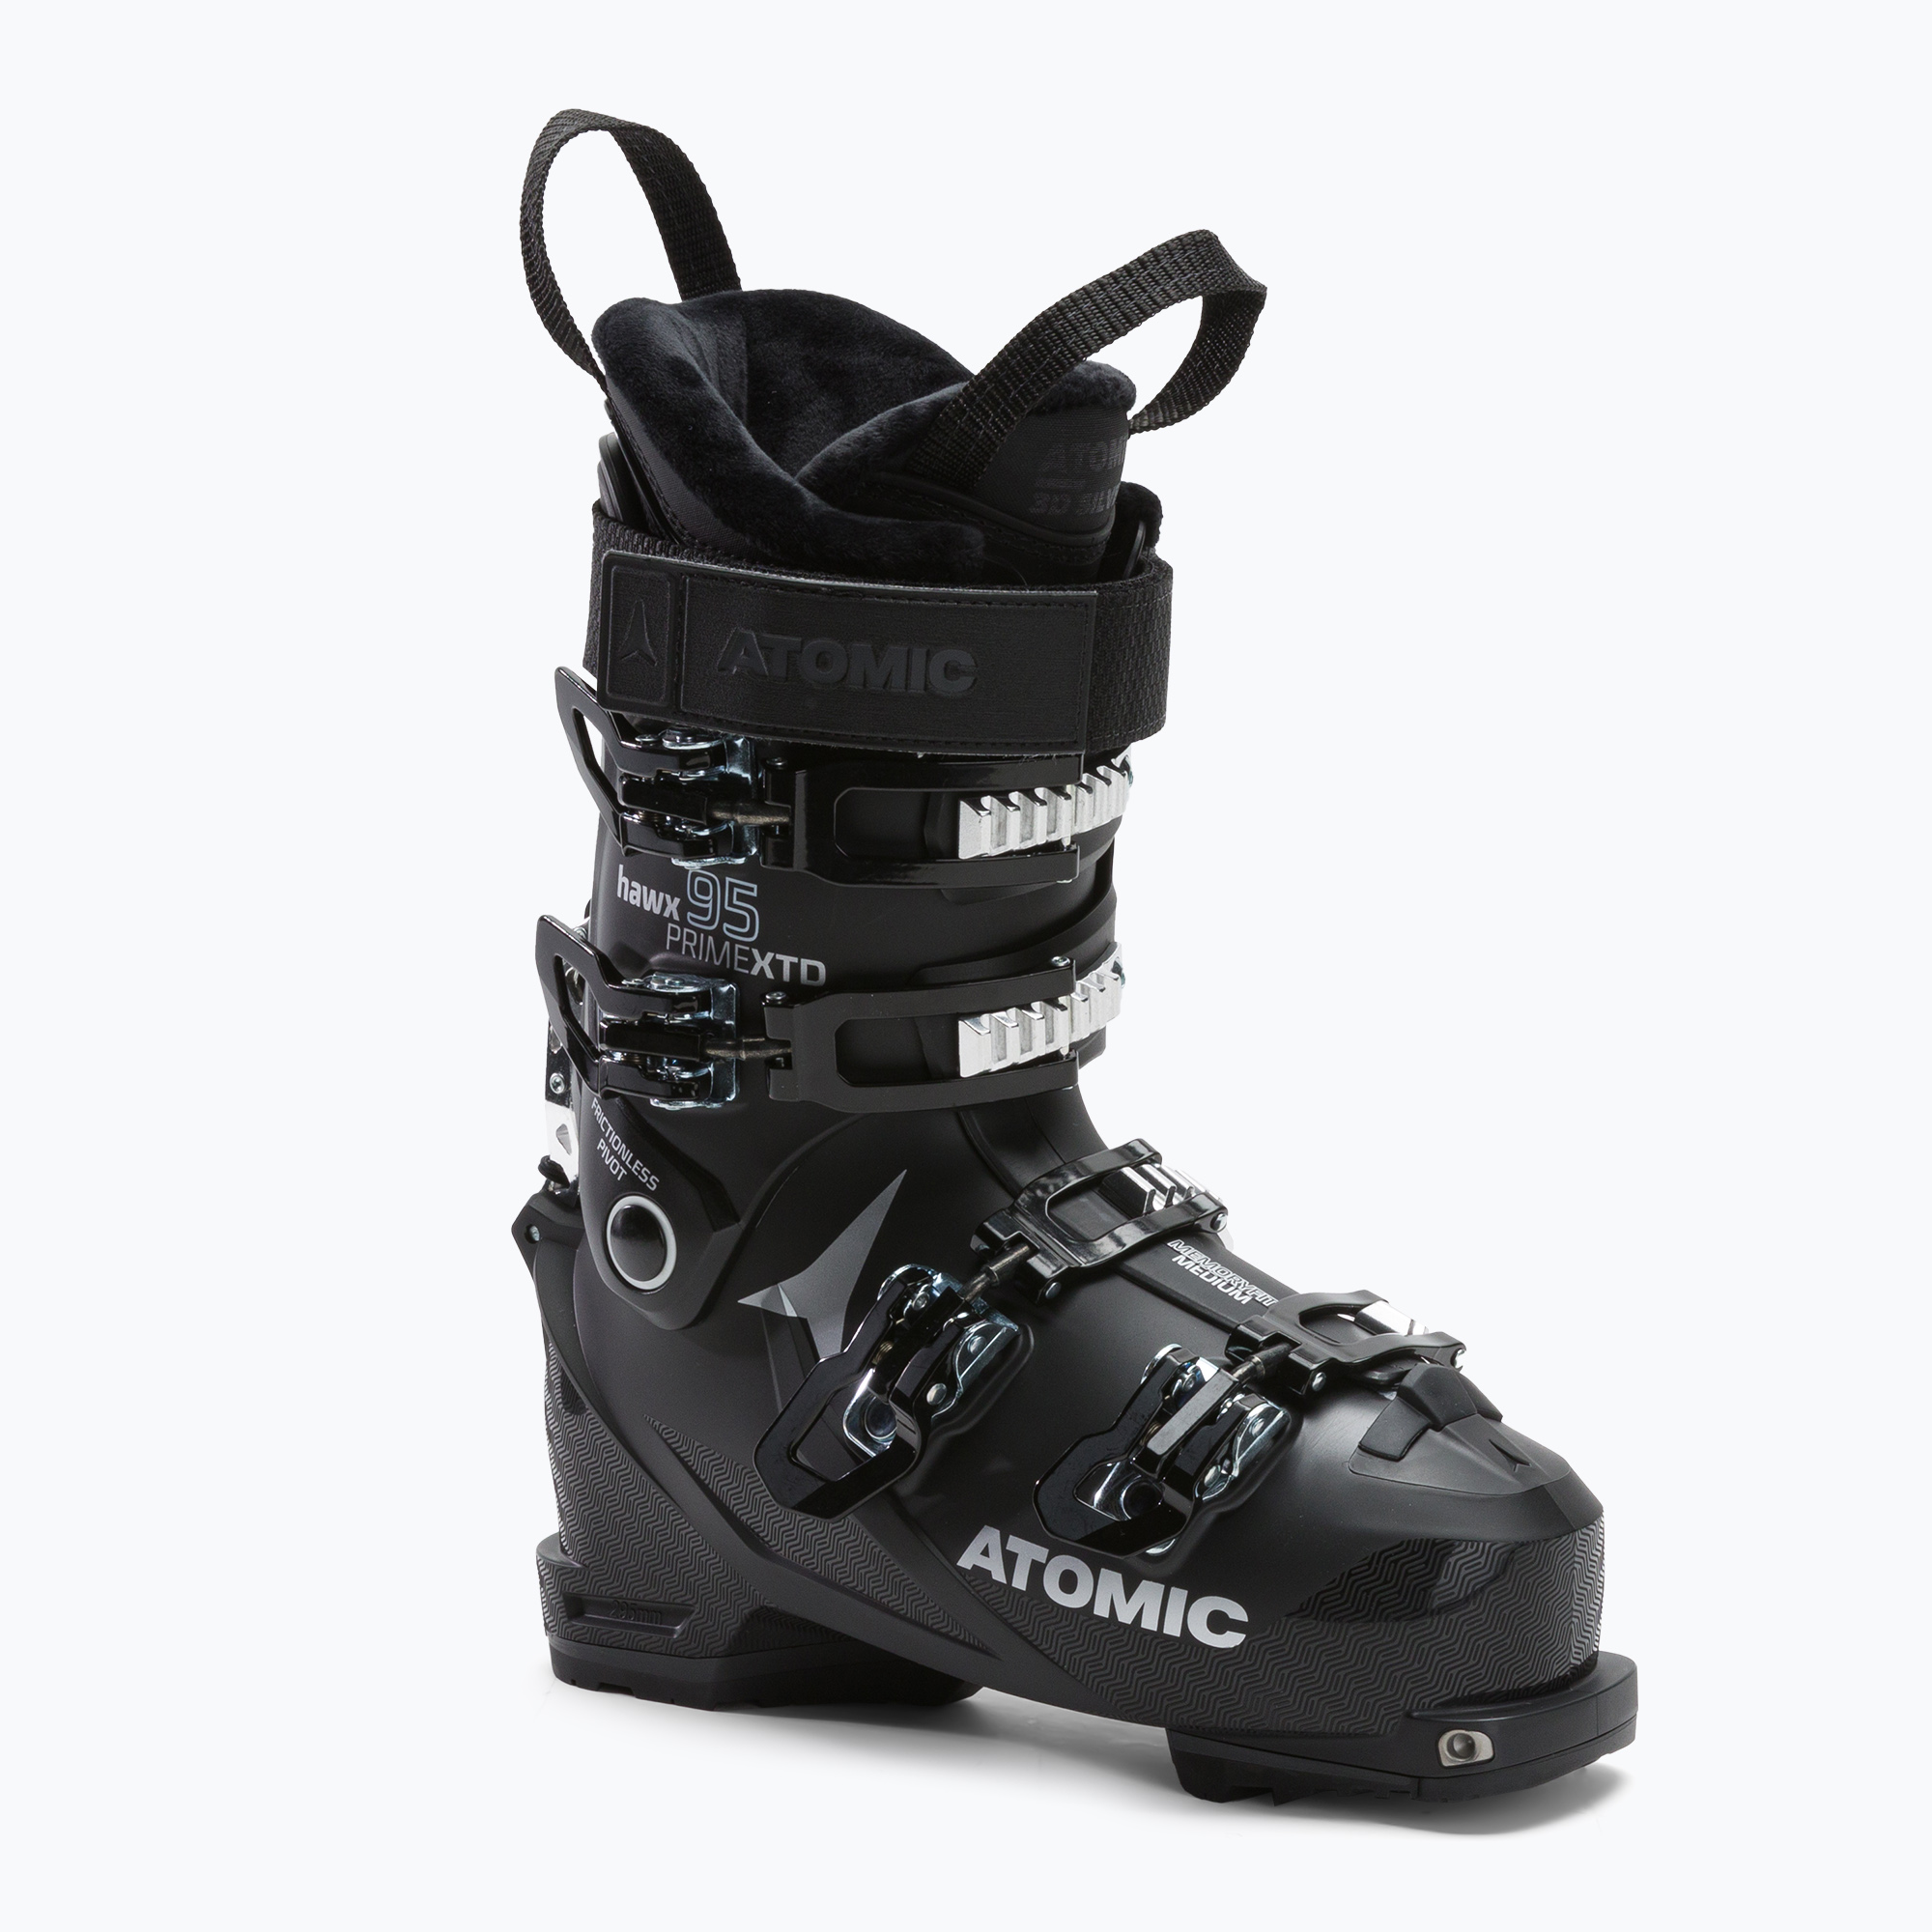 Dámske lyžiarske topánky Atomic Hawx Prime XTD 95 W HT GW 95 čierne AE52578